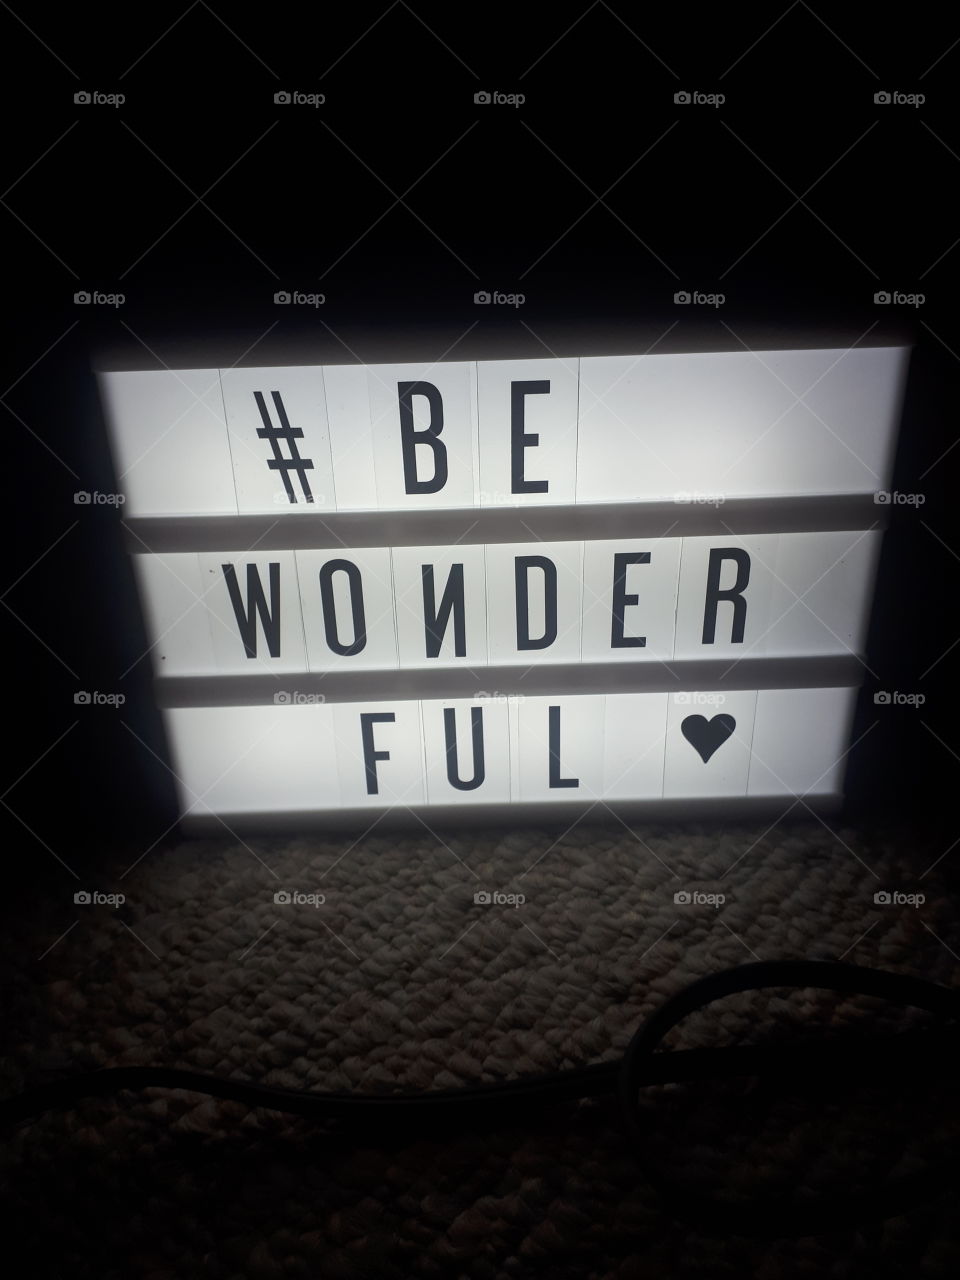 # Be wonderful 💕